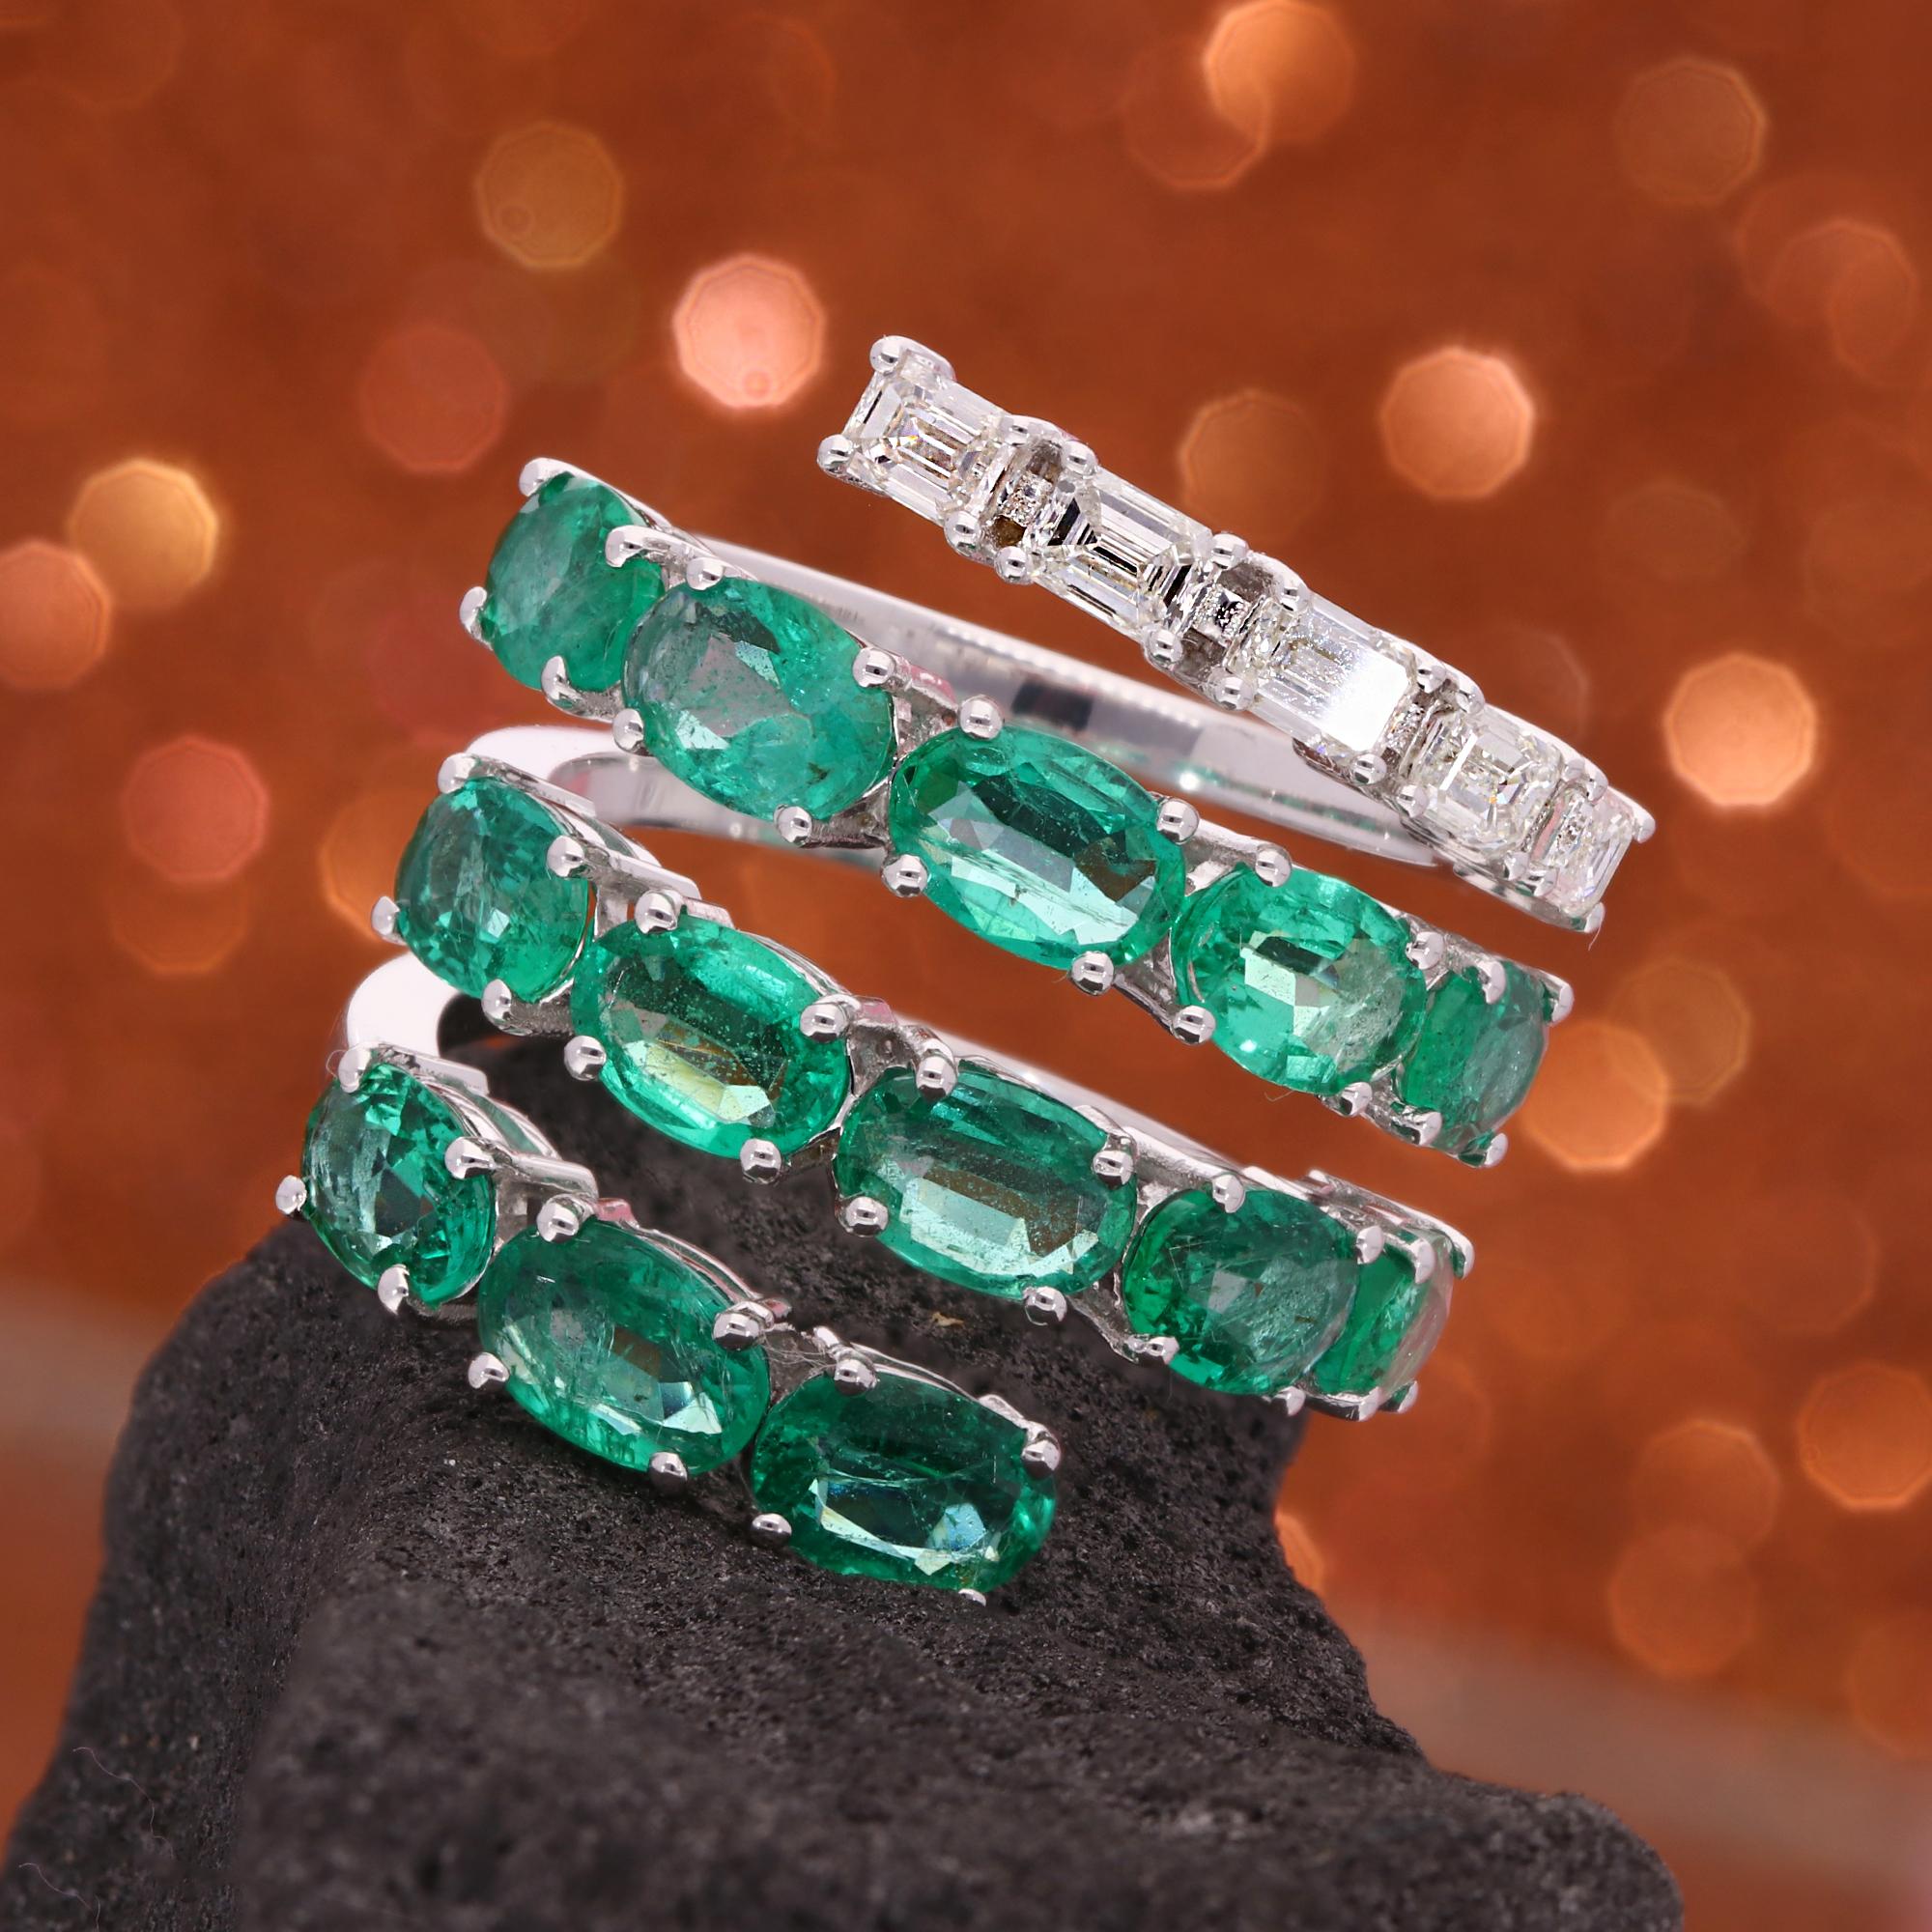 For Sale:  Natural Oval Gemstone Spiral Ring Emerald Cut Diamond 18 Karat White Gold 4